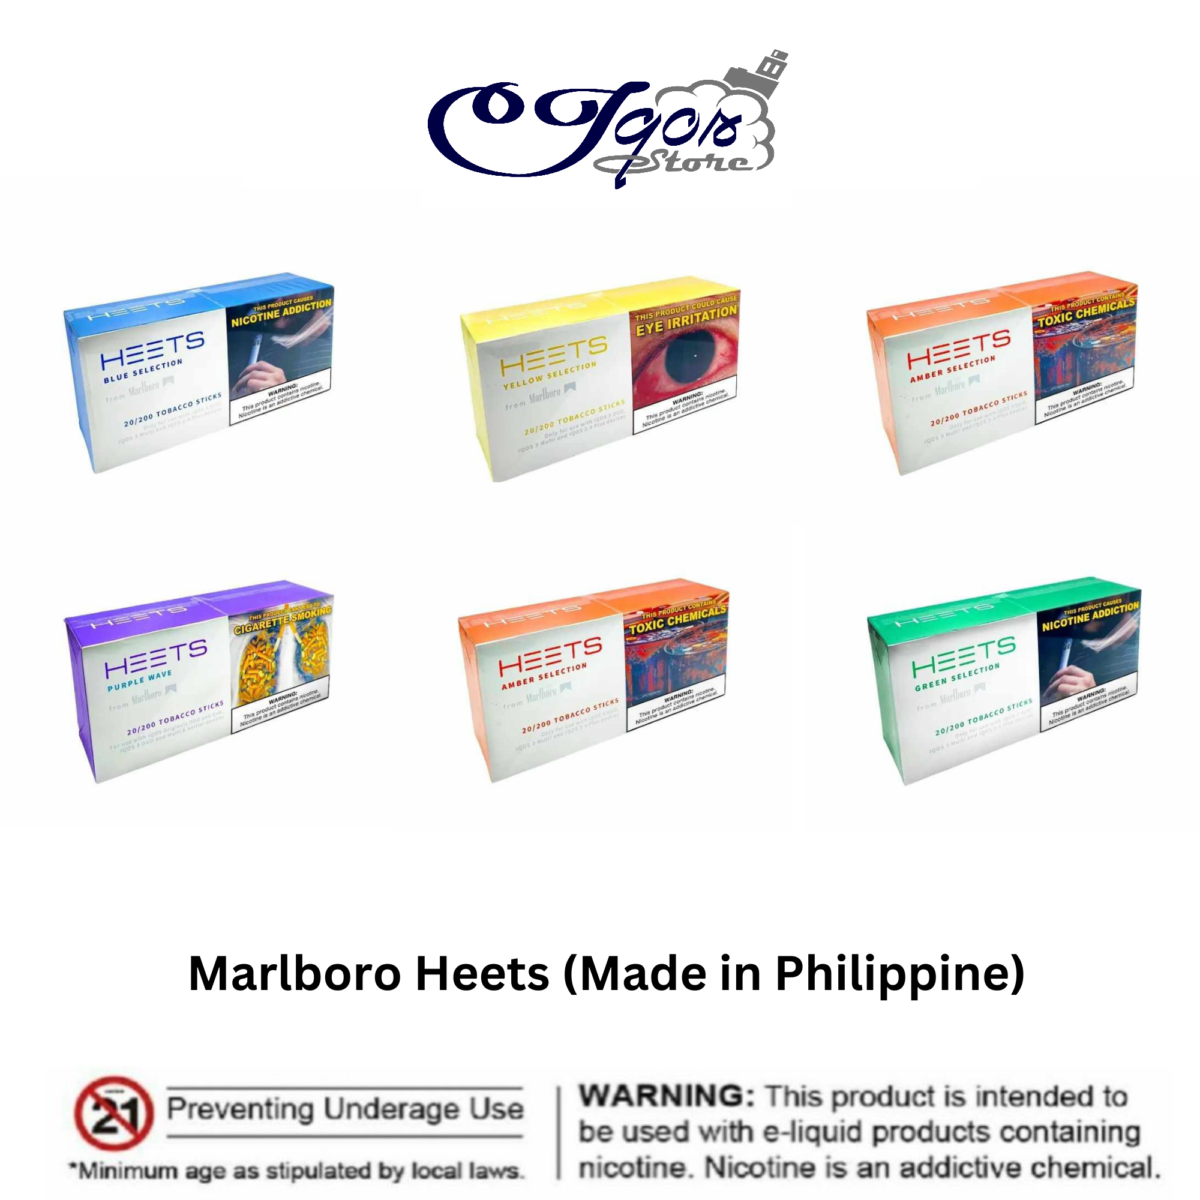 New IQOS Marlboro Heets (Made in Philippine)